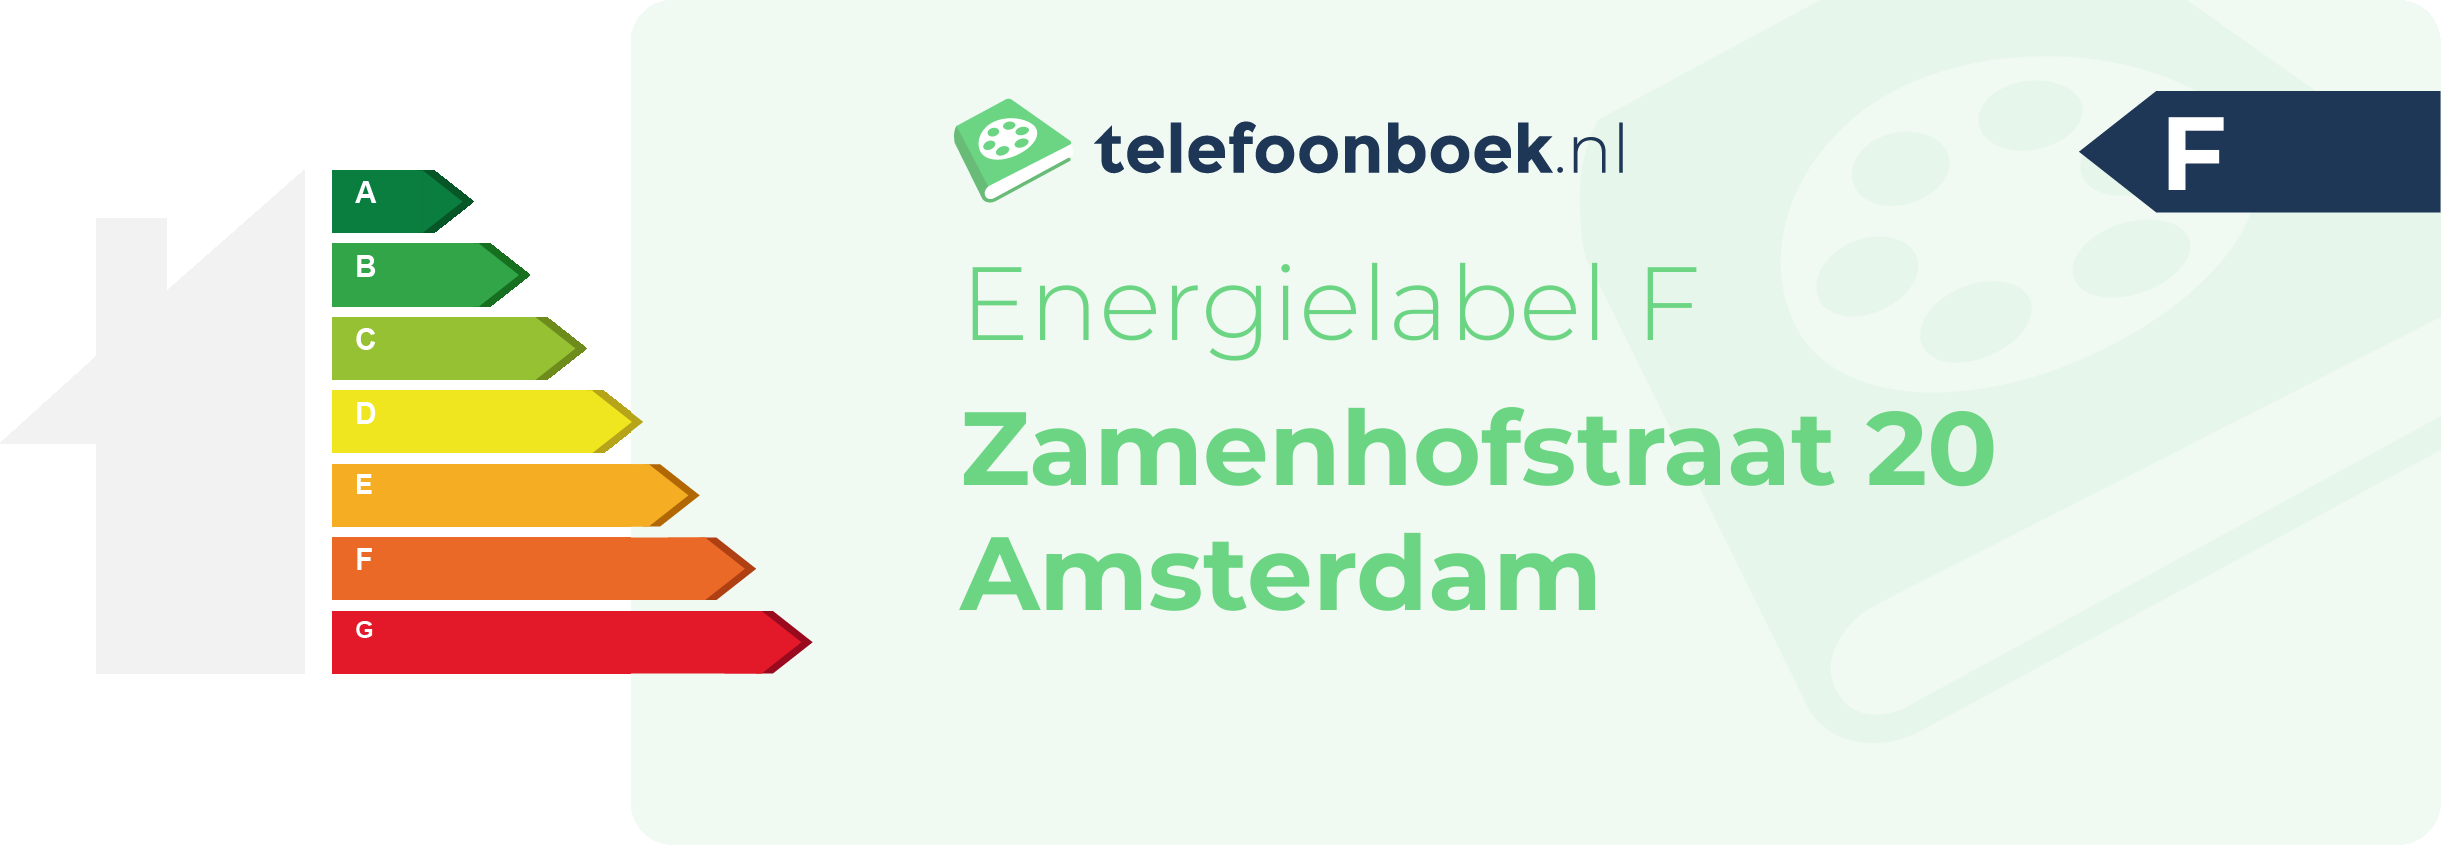 Energielabel Zamenhofstraat 20 Amsterdam